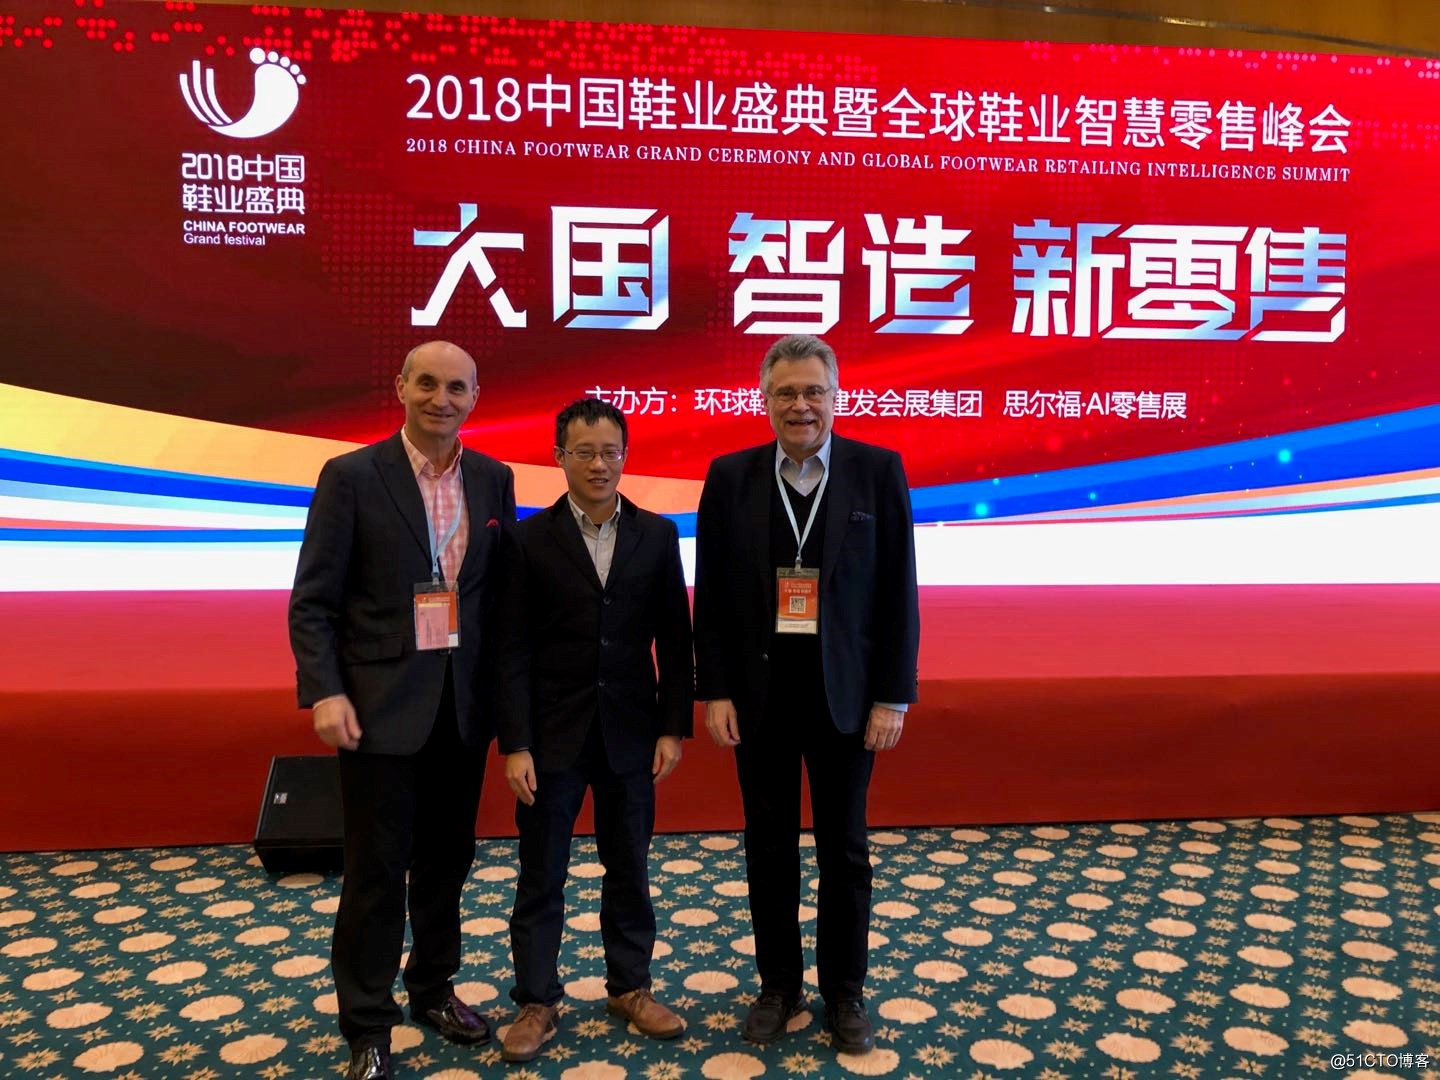 2018 china footwear grand ceremony summit